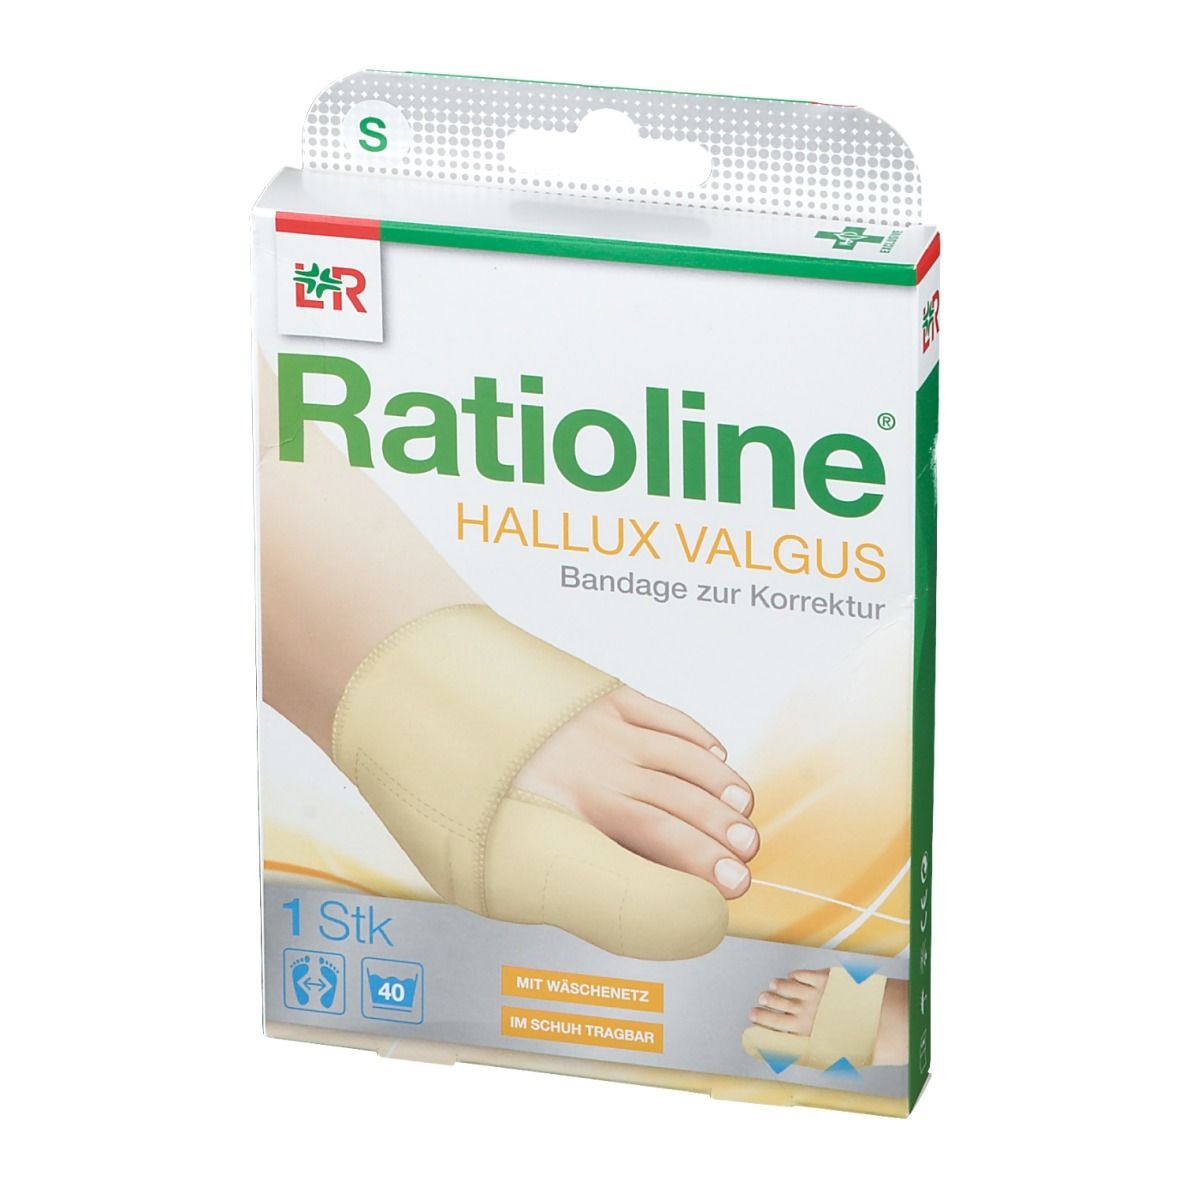 Ratioline® Hallux Valgus Bandage S